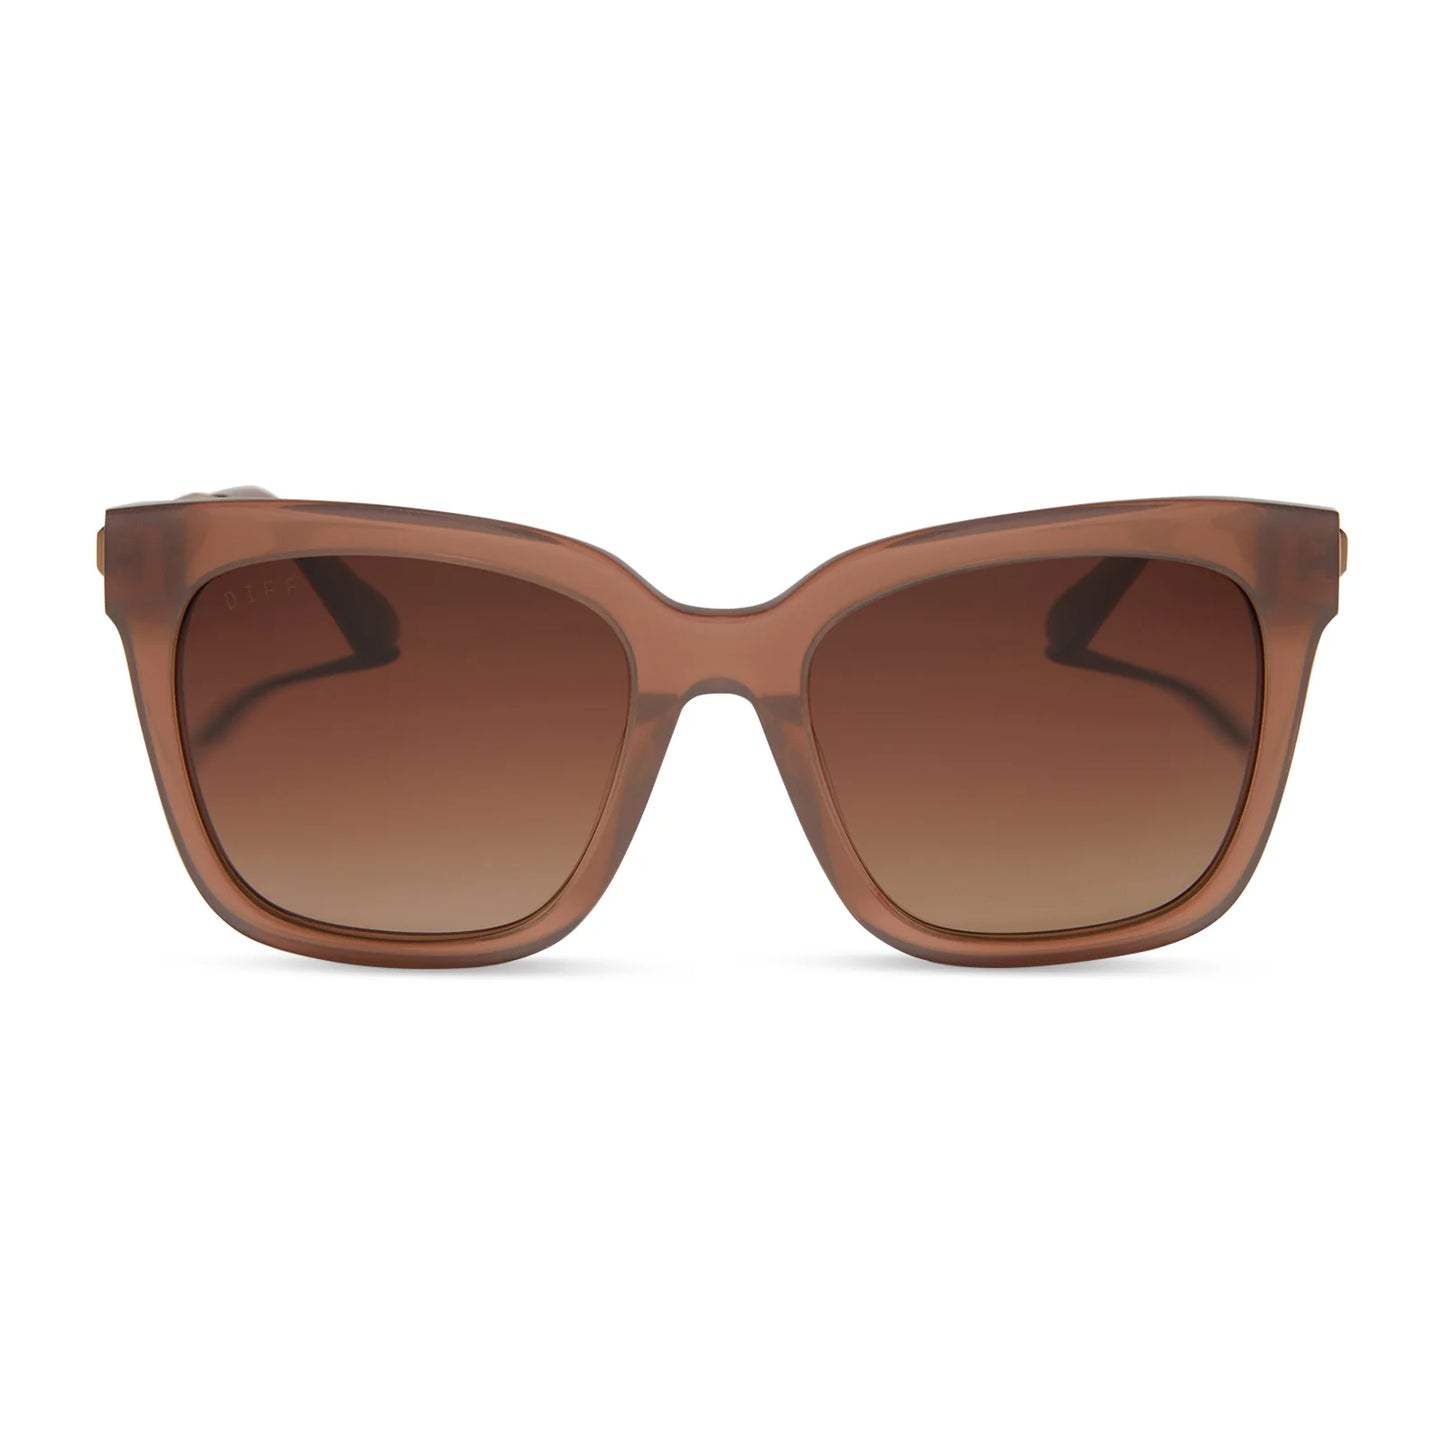 DIFF Eyewear - Bella - Macchiato Brown Gradient Polarized Sunglasses